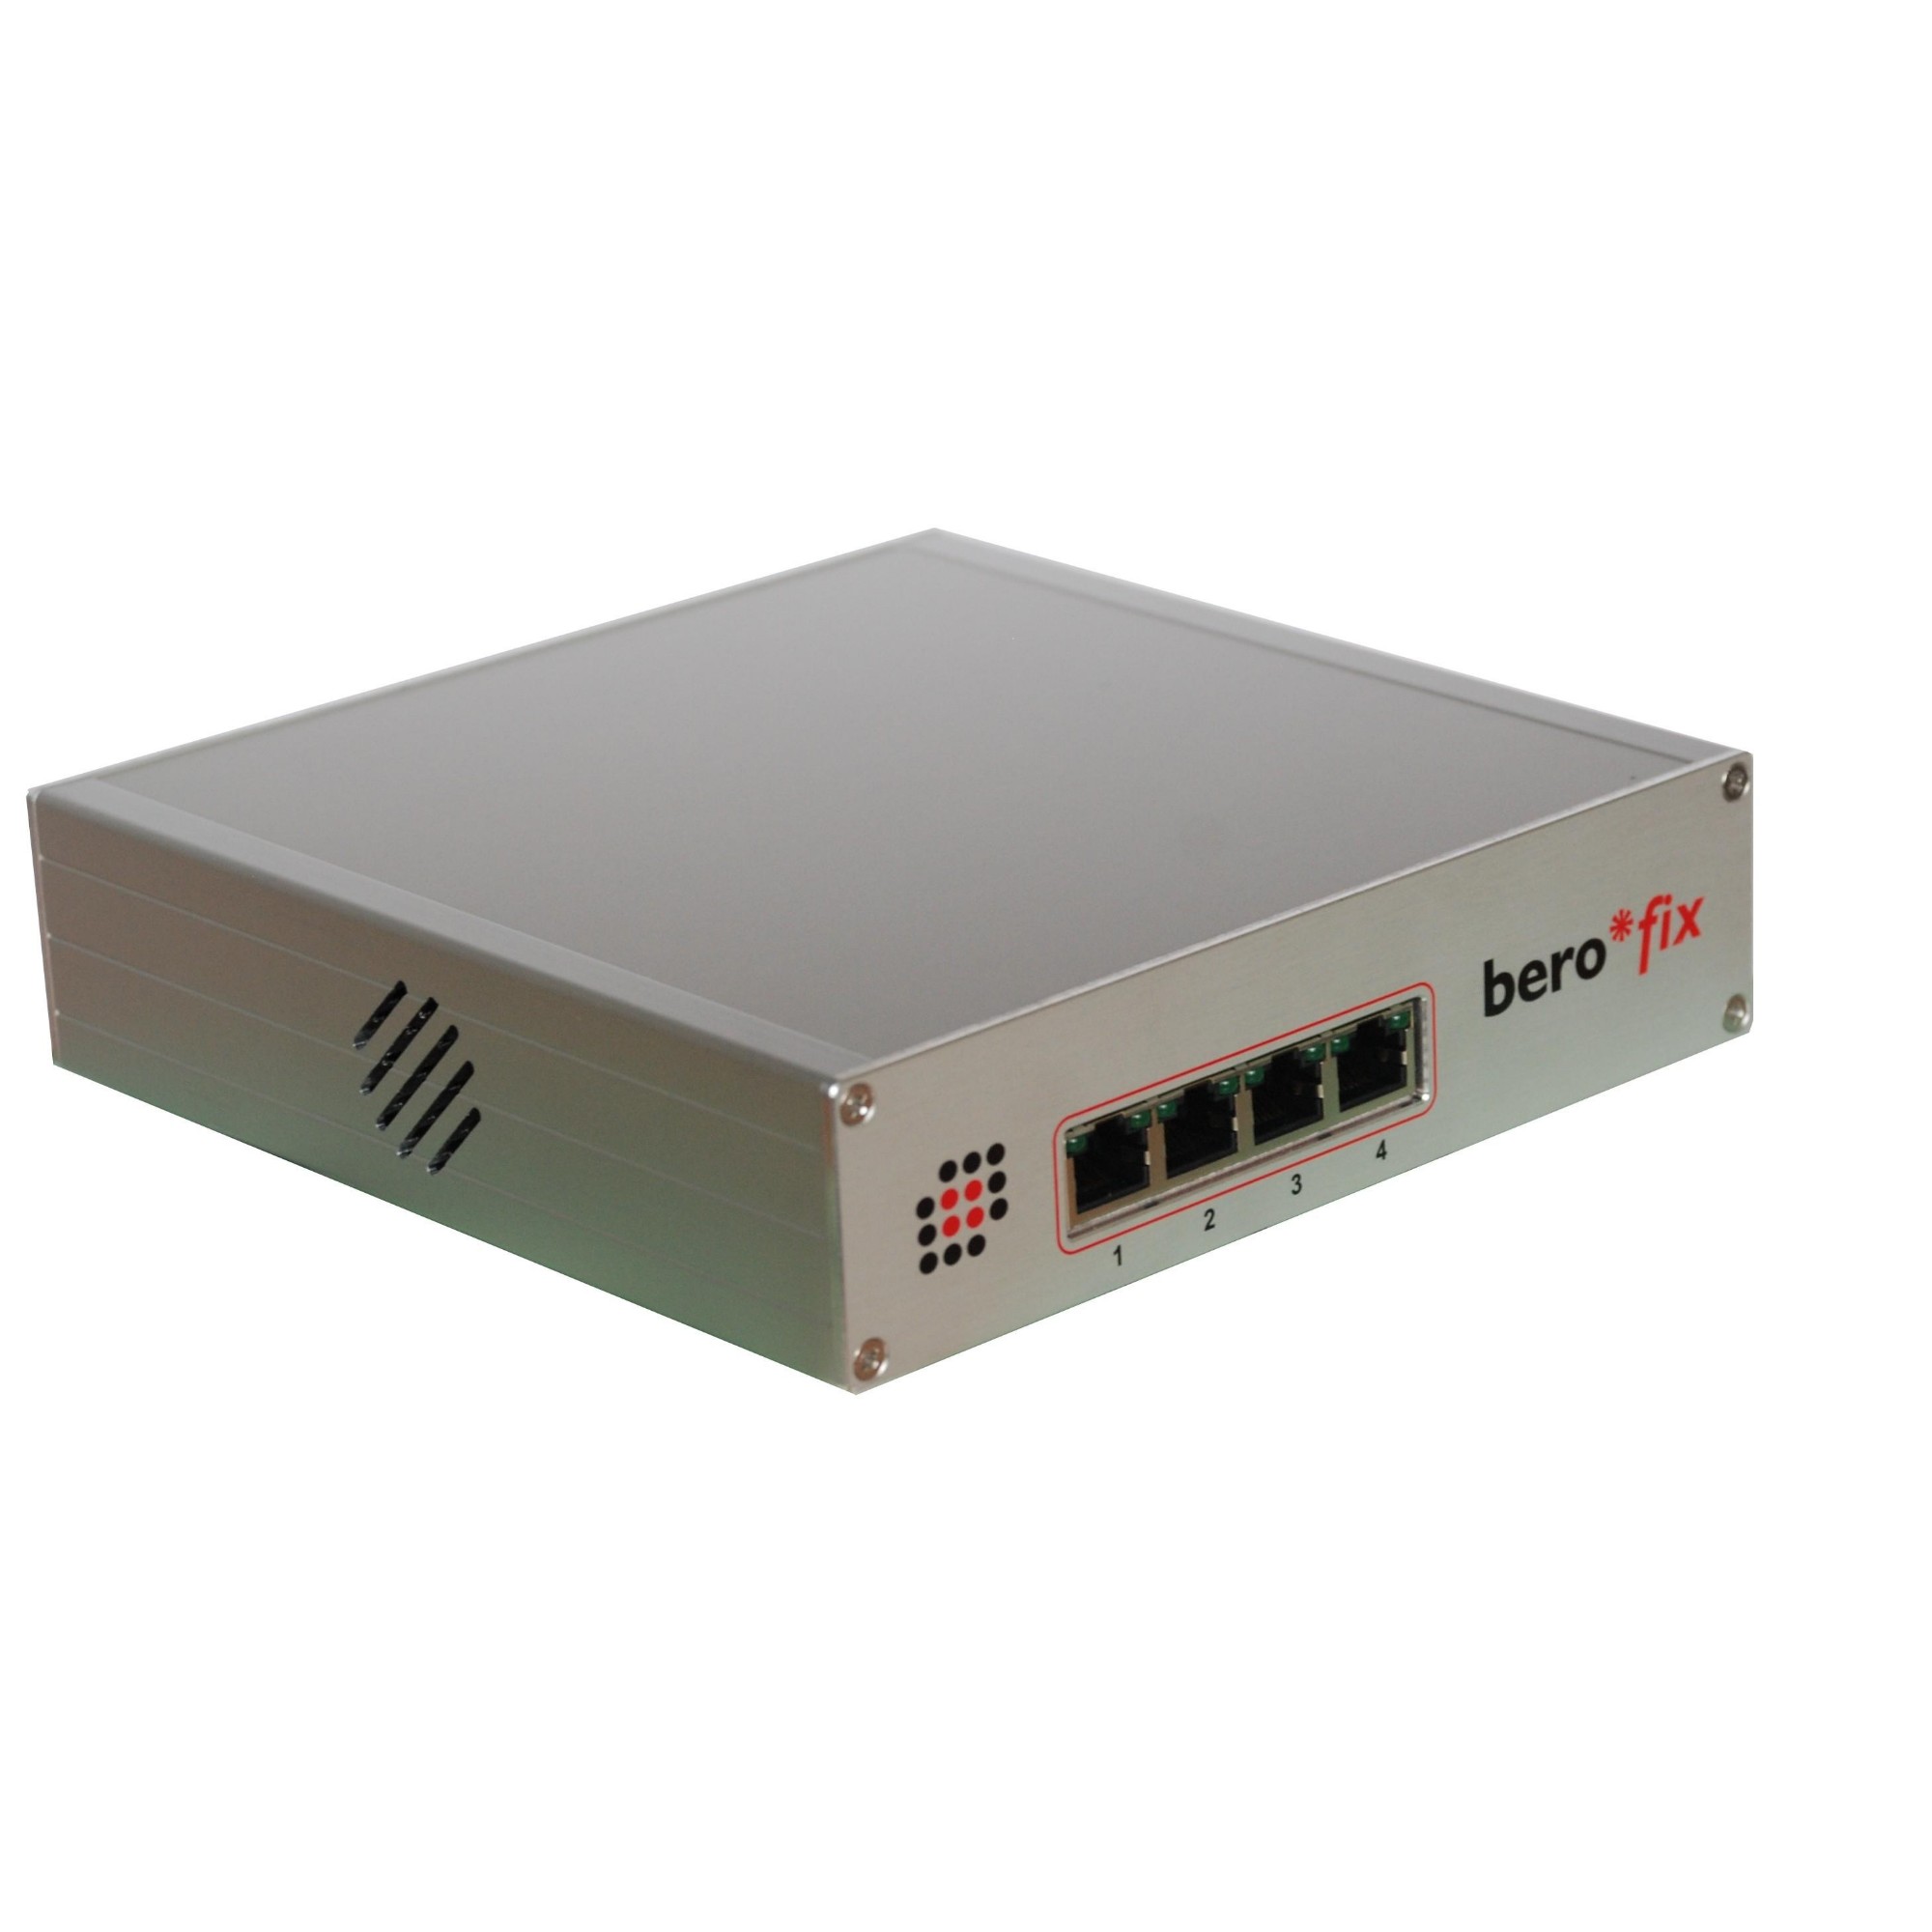 beroNet BFSB4XO4XS gateway/controller